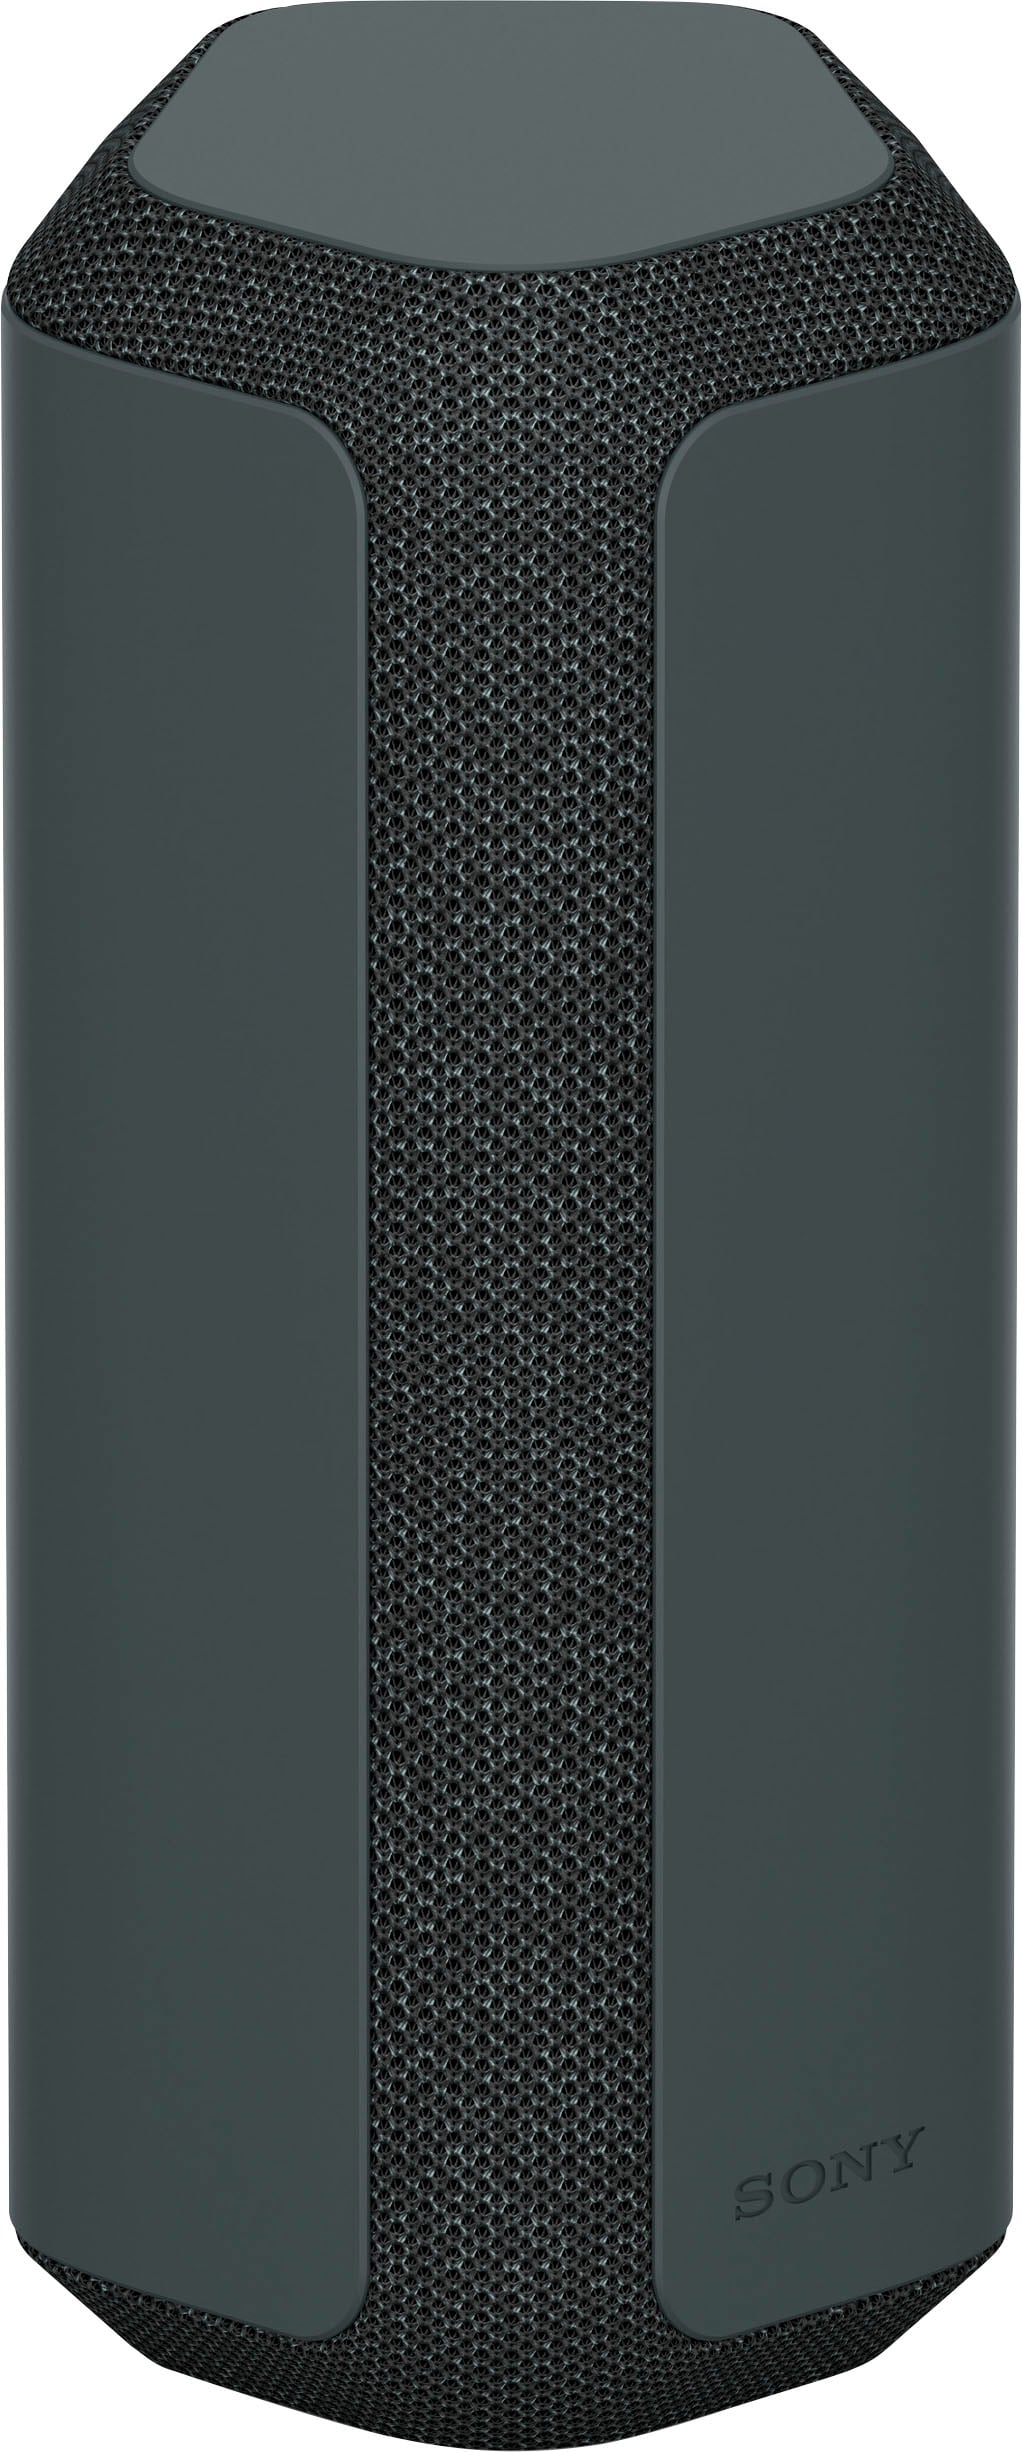 Sony - XE300 Portable X-Series Bluetooth Speaker - Black_1